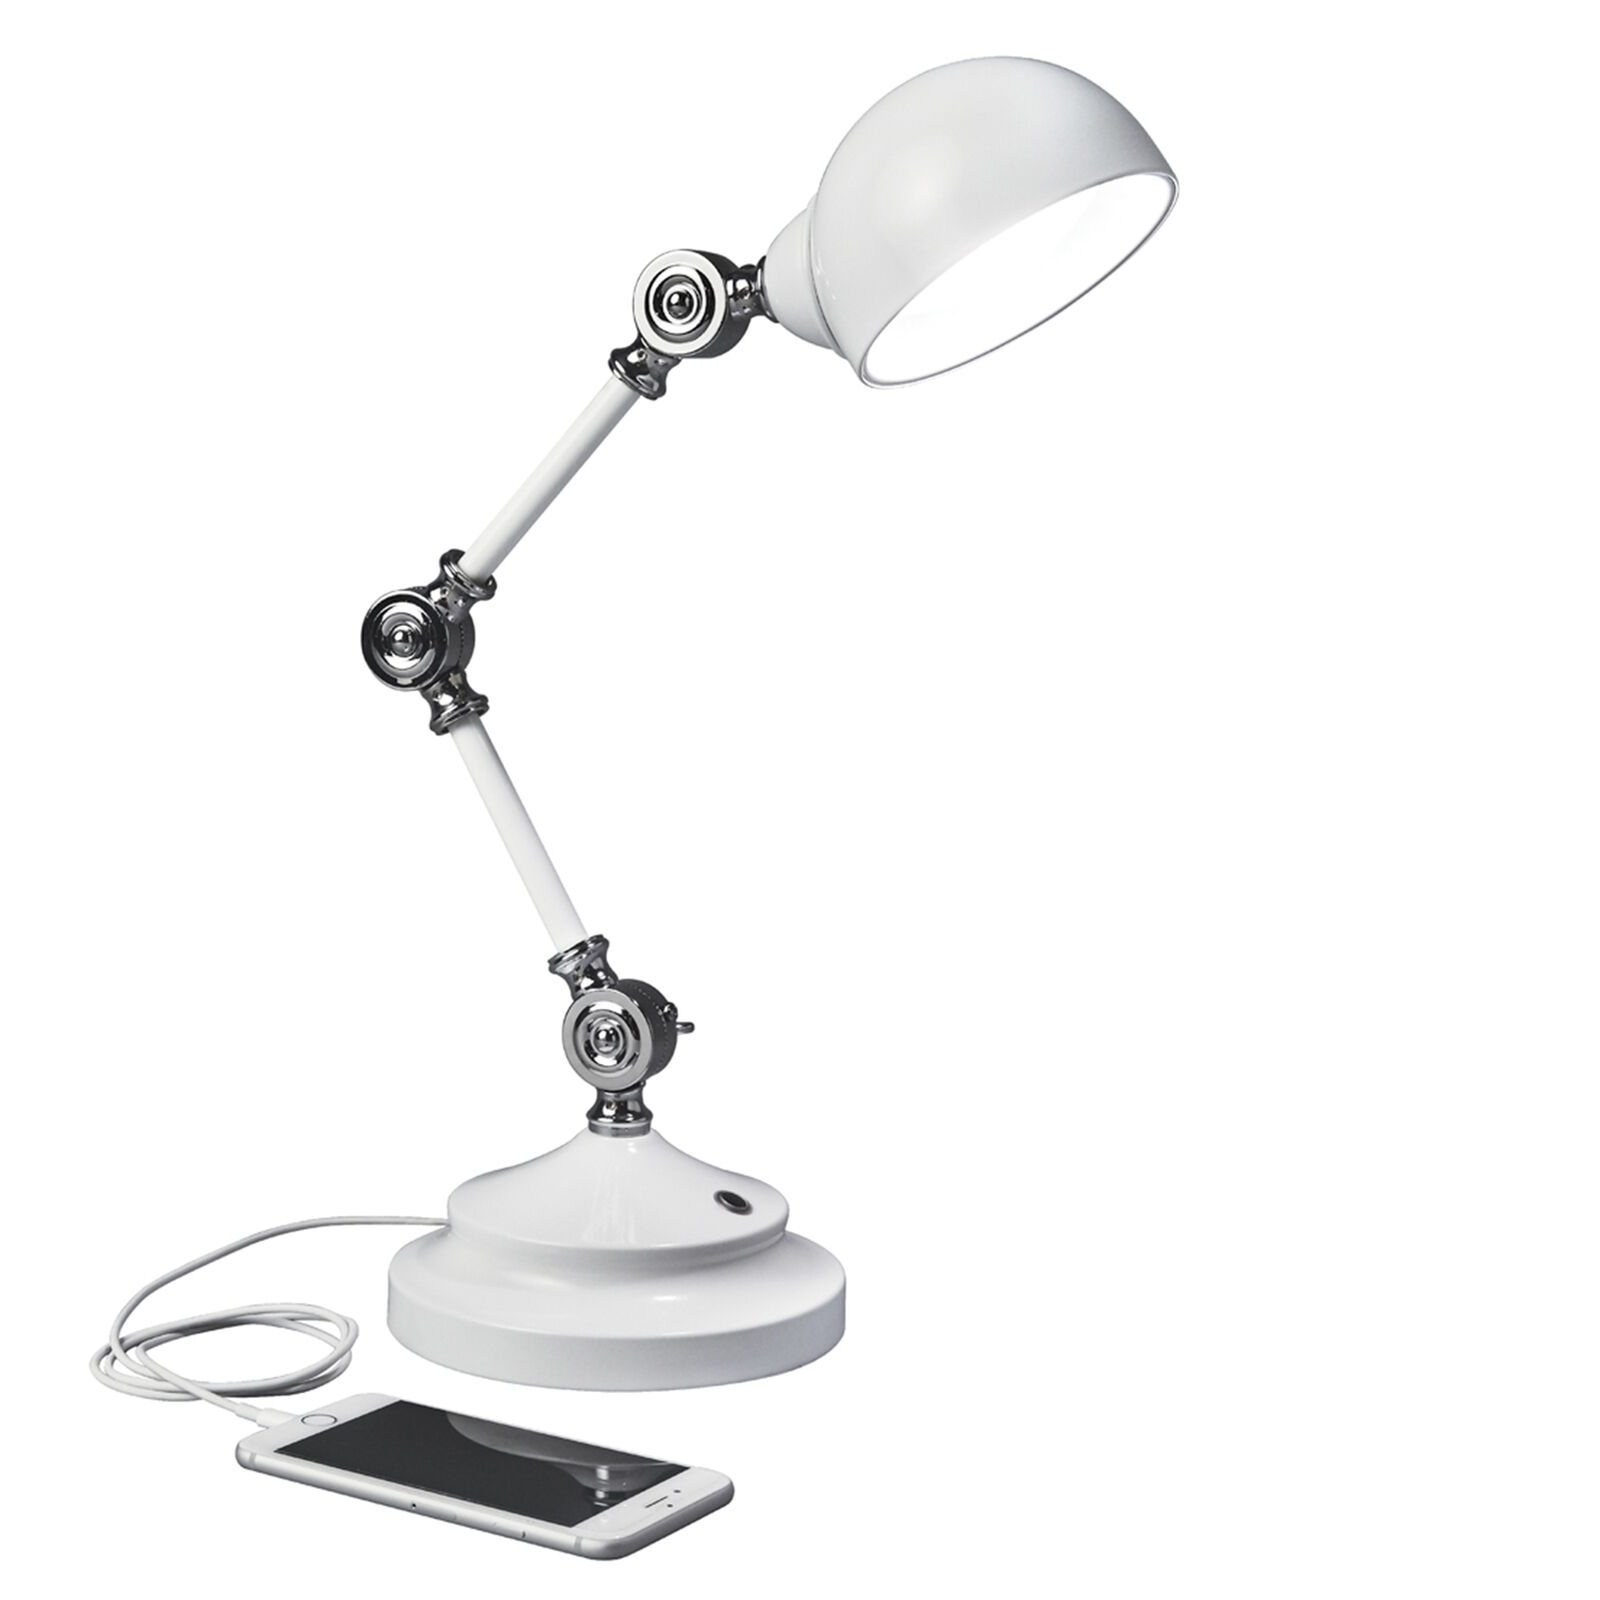 Ottlite Revive Led Desk Lamp Touch Sensitive Control 3 Brightness Mode For regarding sizing 1600 X 1600